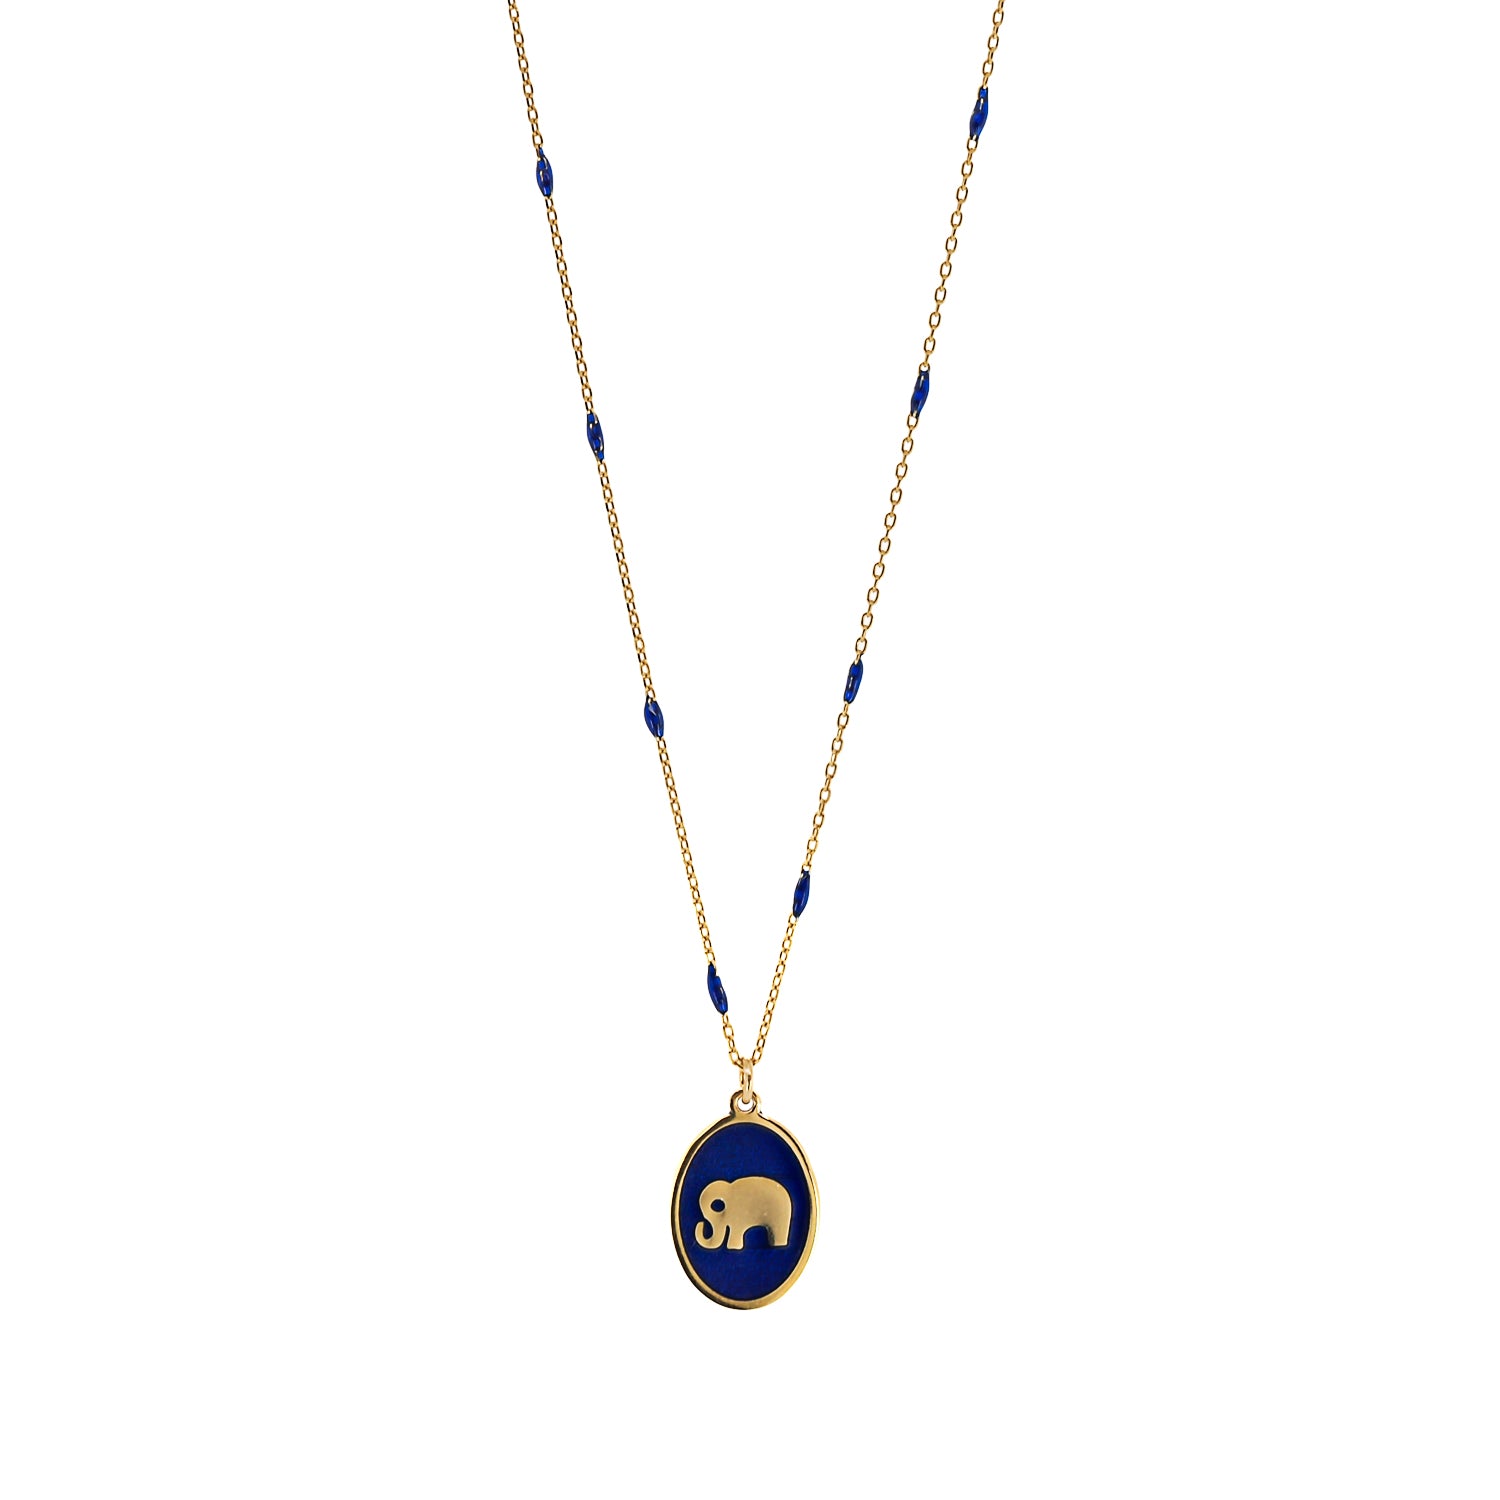 Blue Enamel Infuses Calm and Serenity - Spirit Elephant Pendant Necklace.